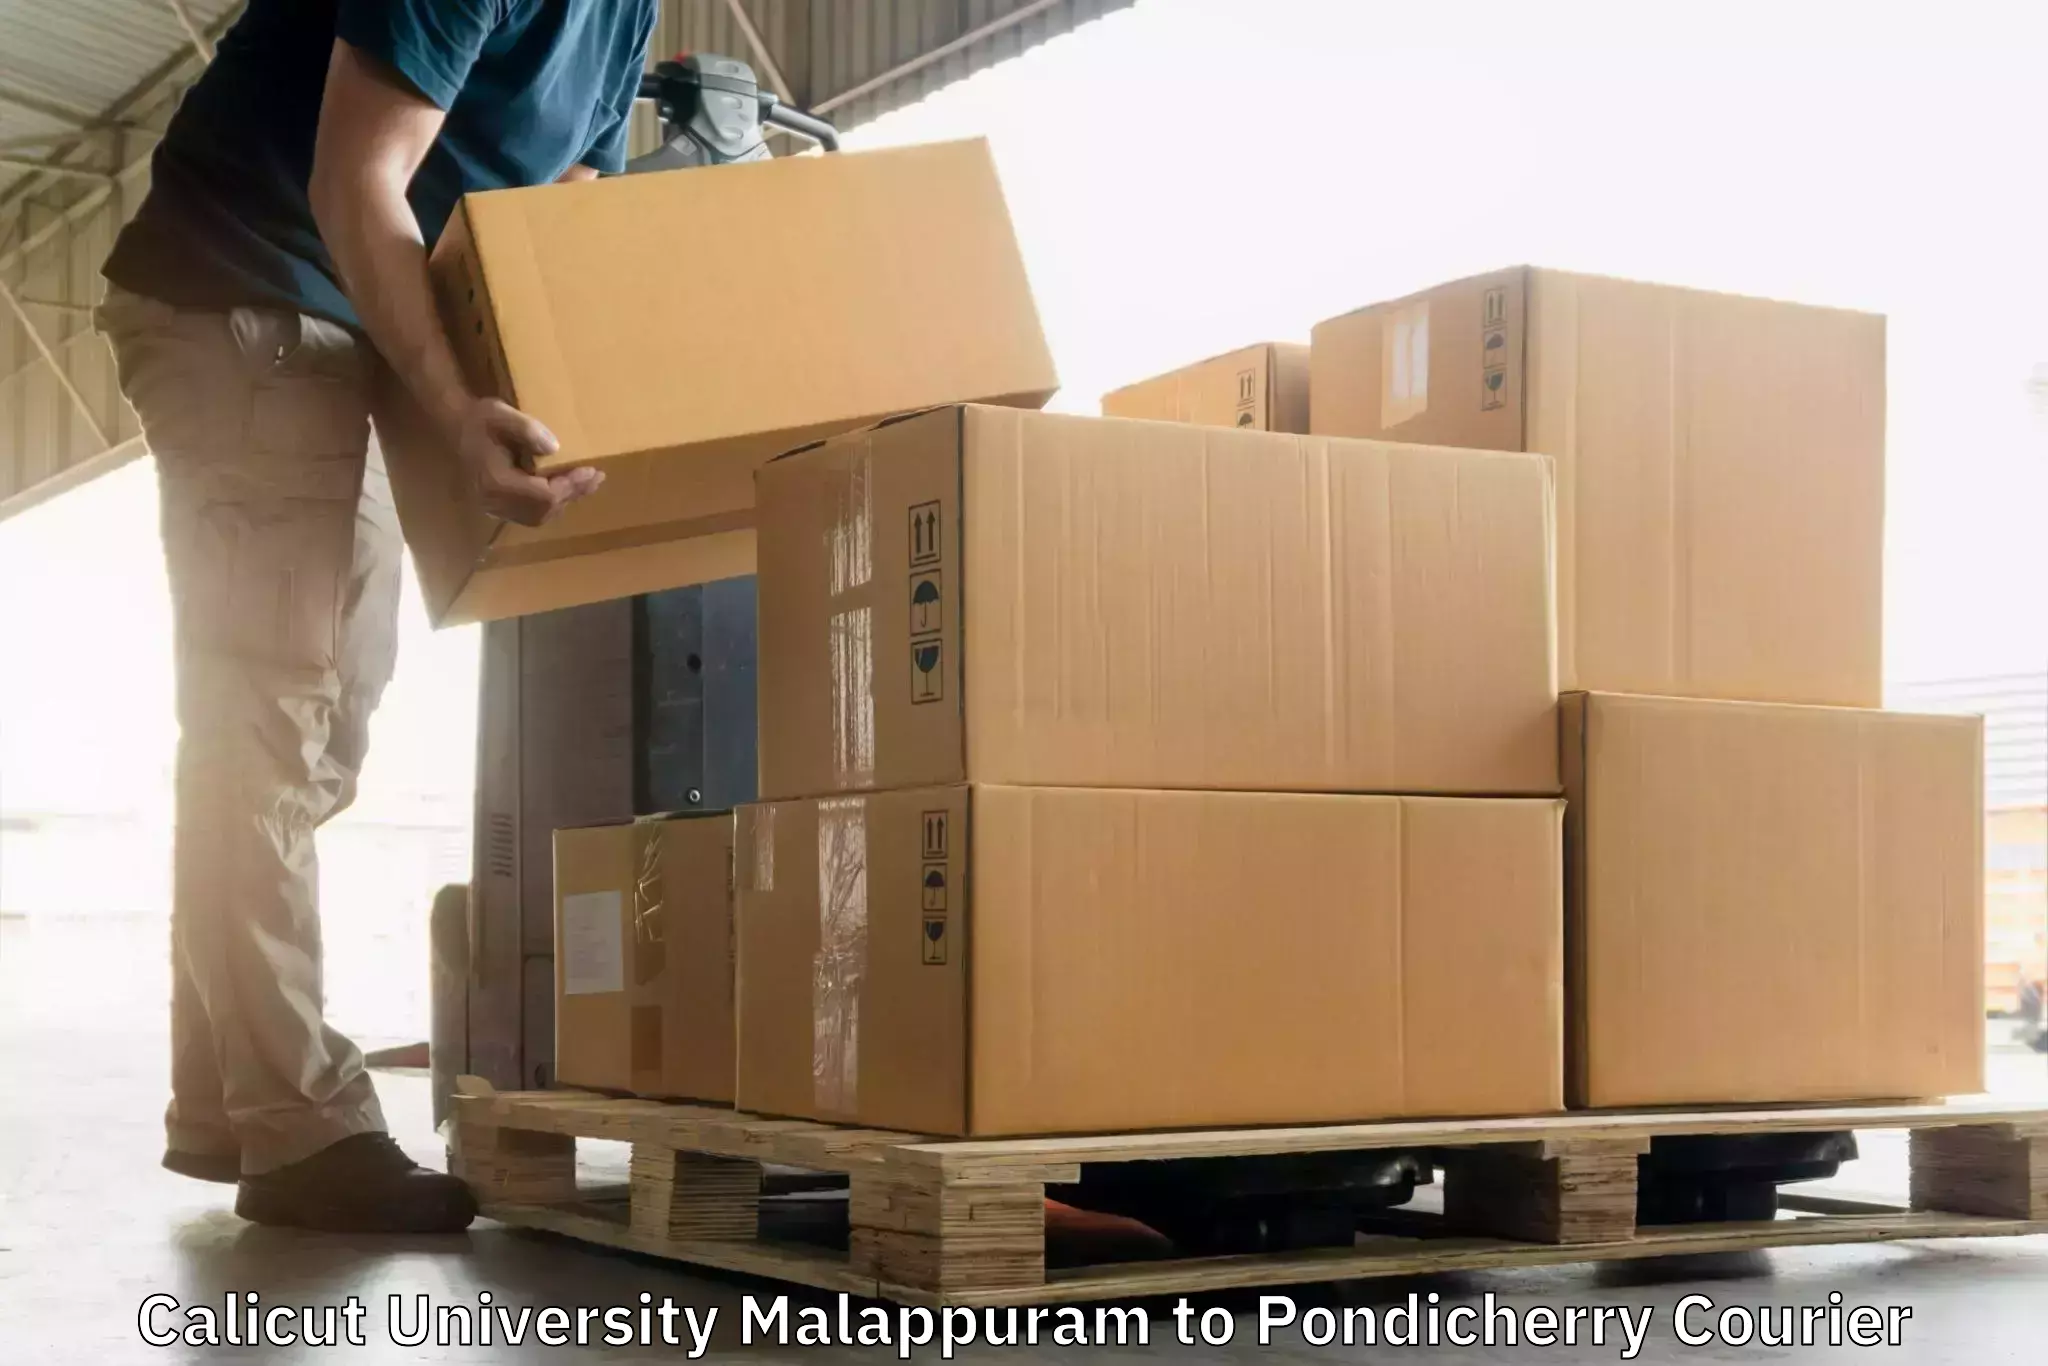 Small business couriers Calicut University Malappuram to Pondicherry